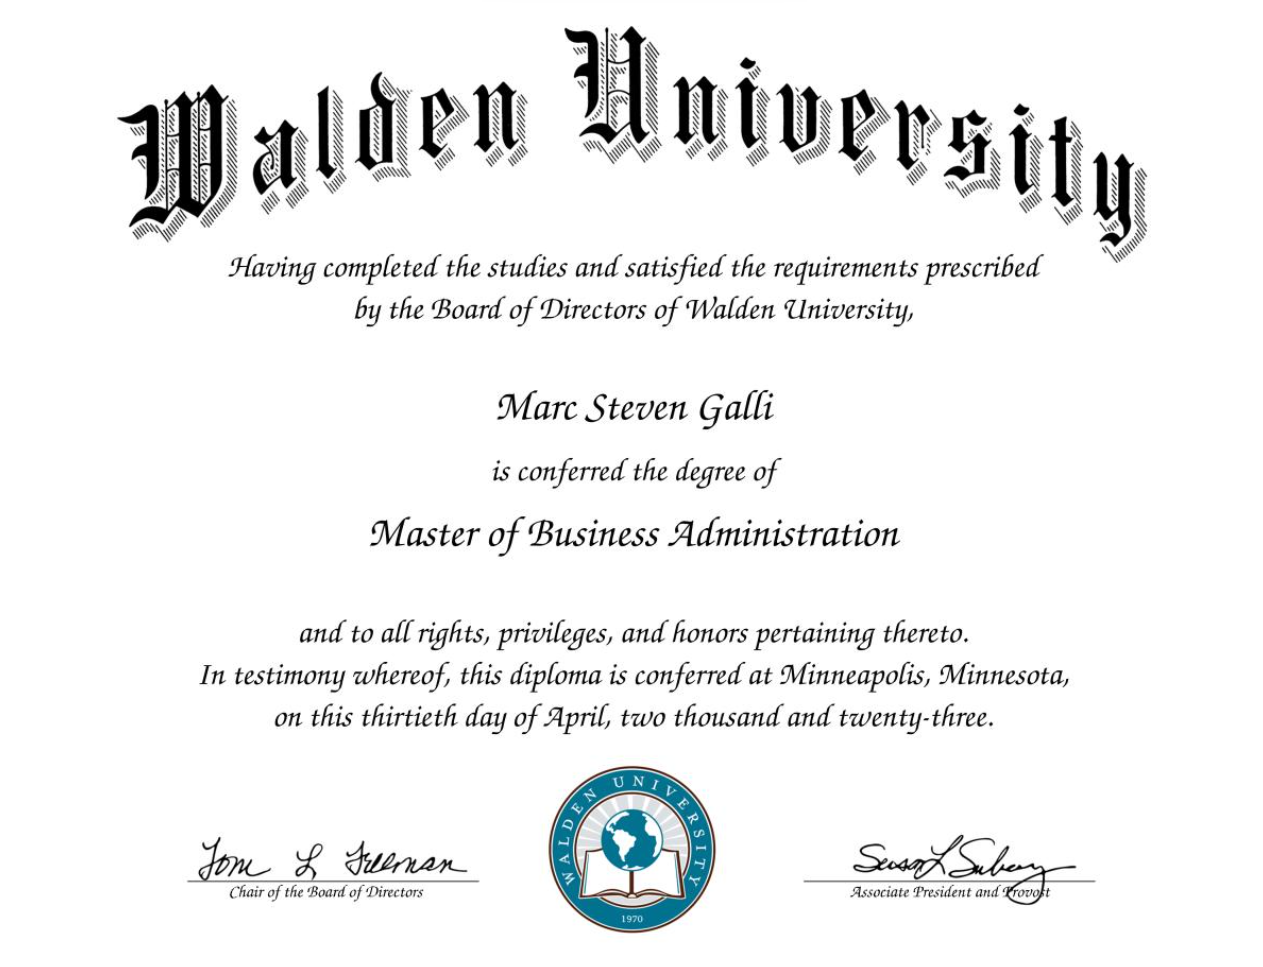 Marc S. Galli, Master of Business Administration, Walden University